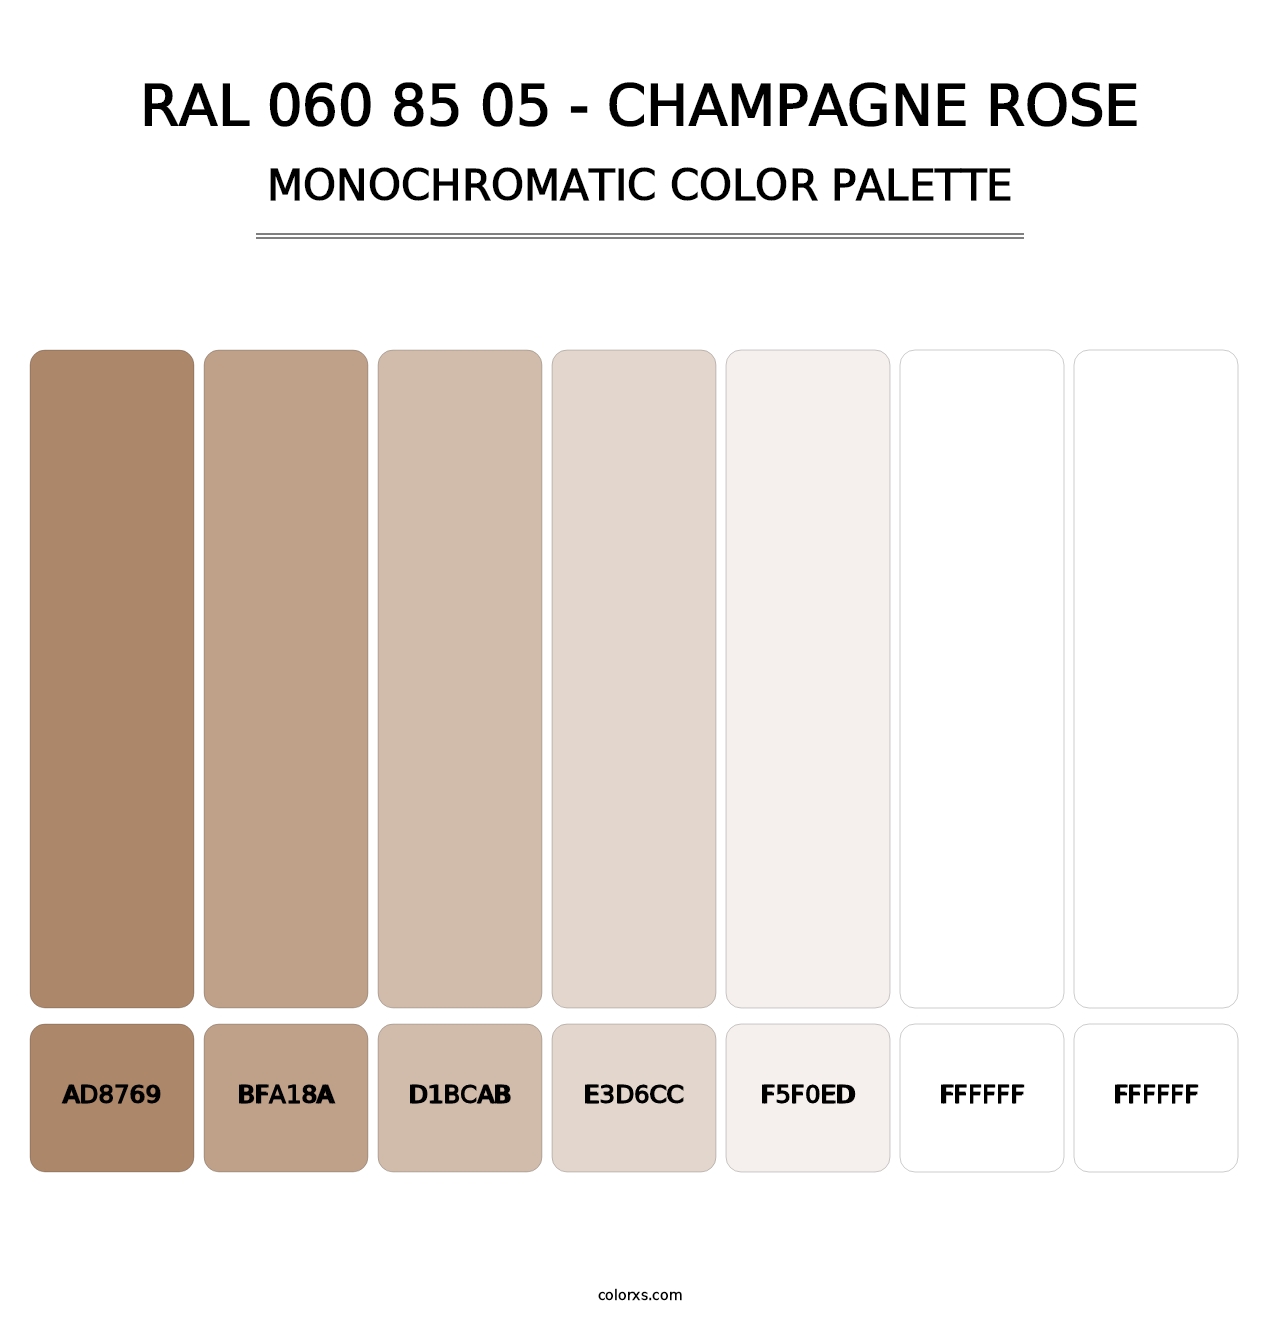 RAL 060 85 05 - Champagne Rose - Monochromatic Color Palette